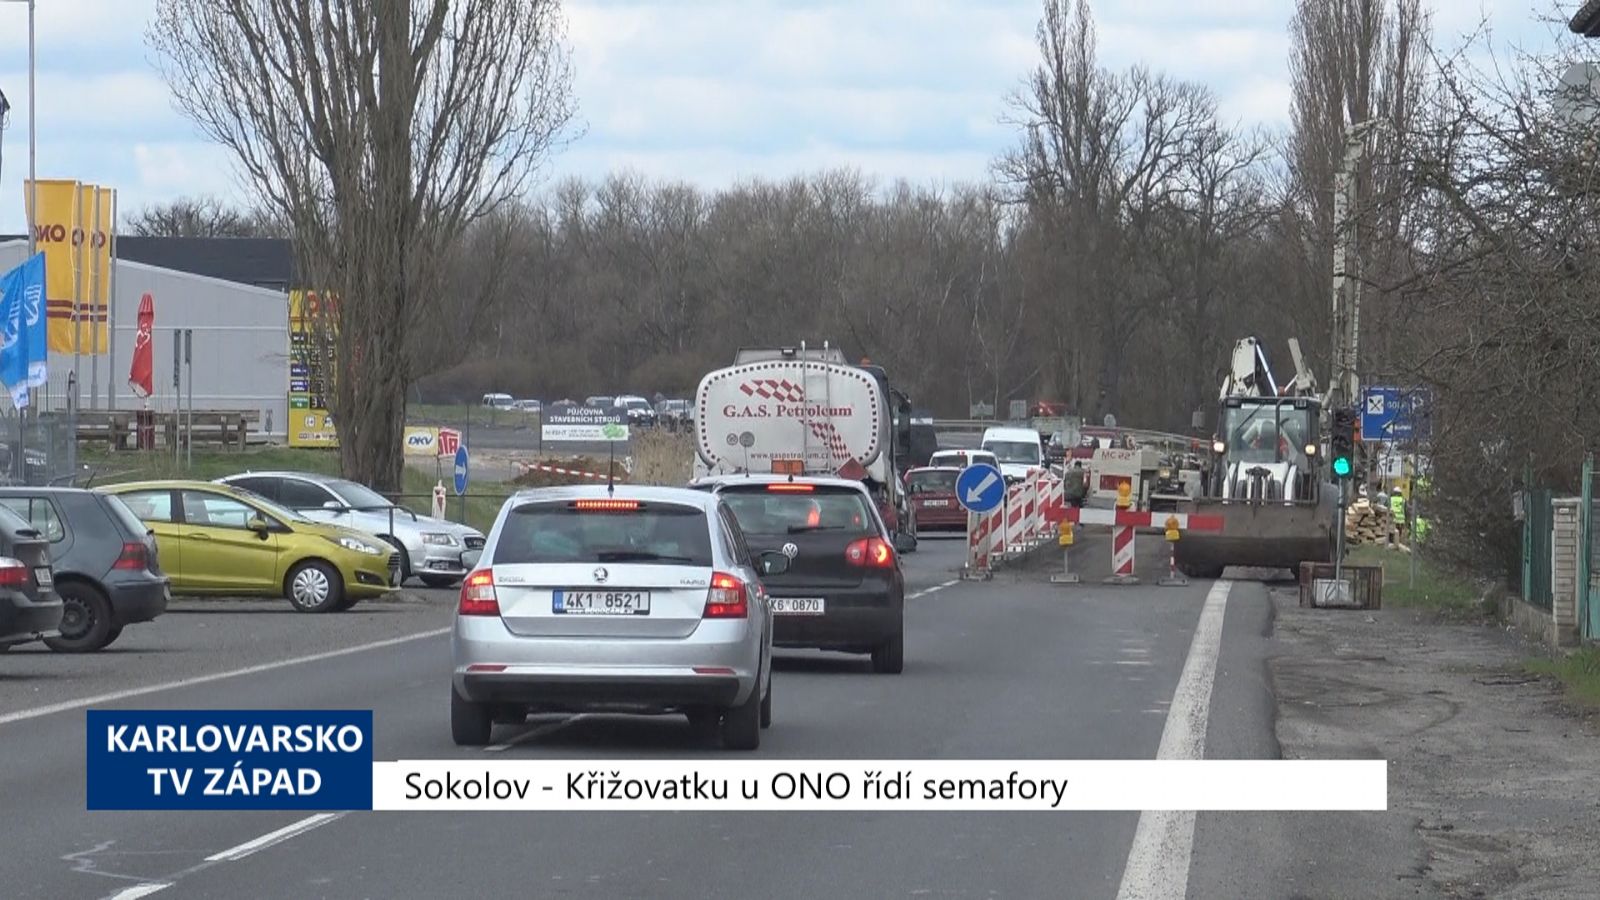 Sokolov: Křižovatku u ONO řídí semafory (TV Západ)